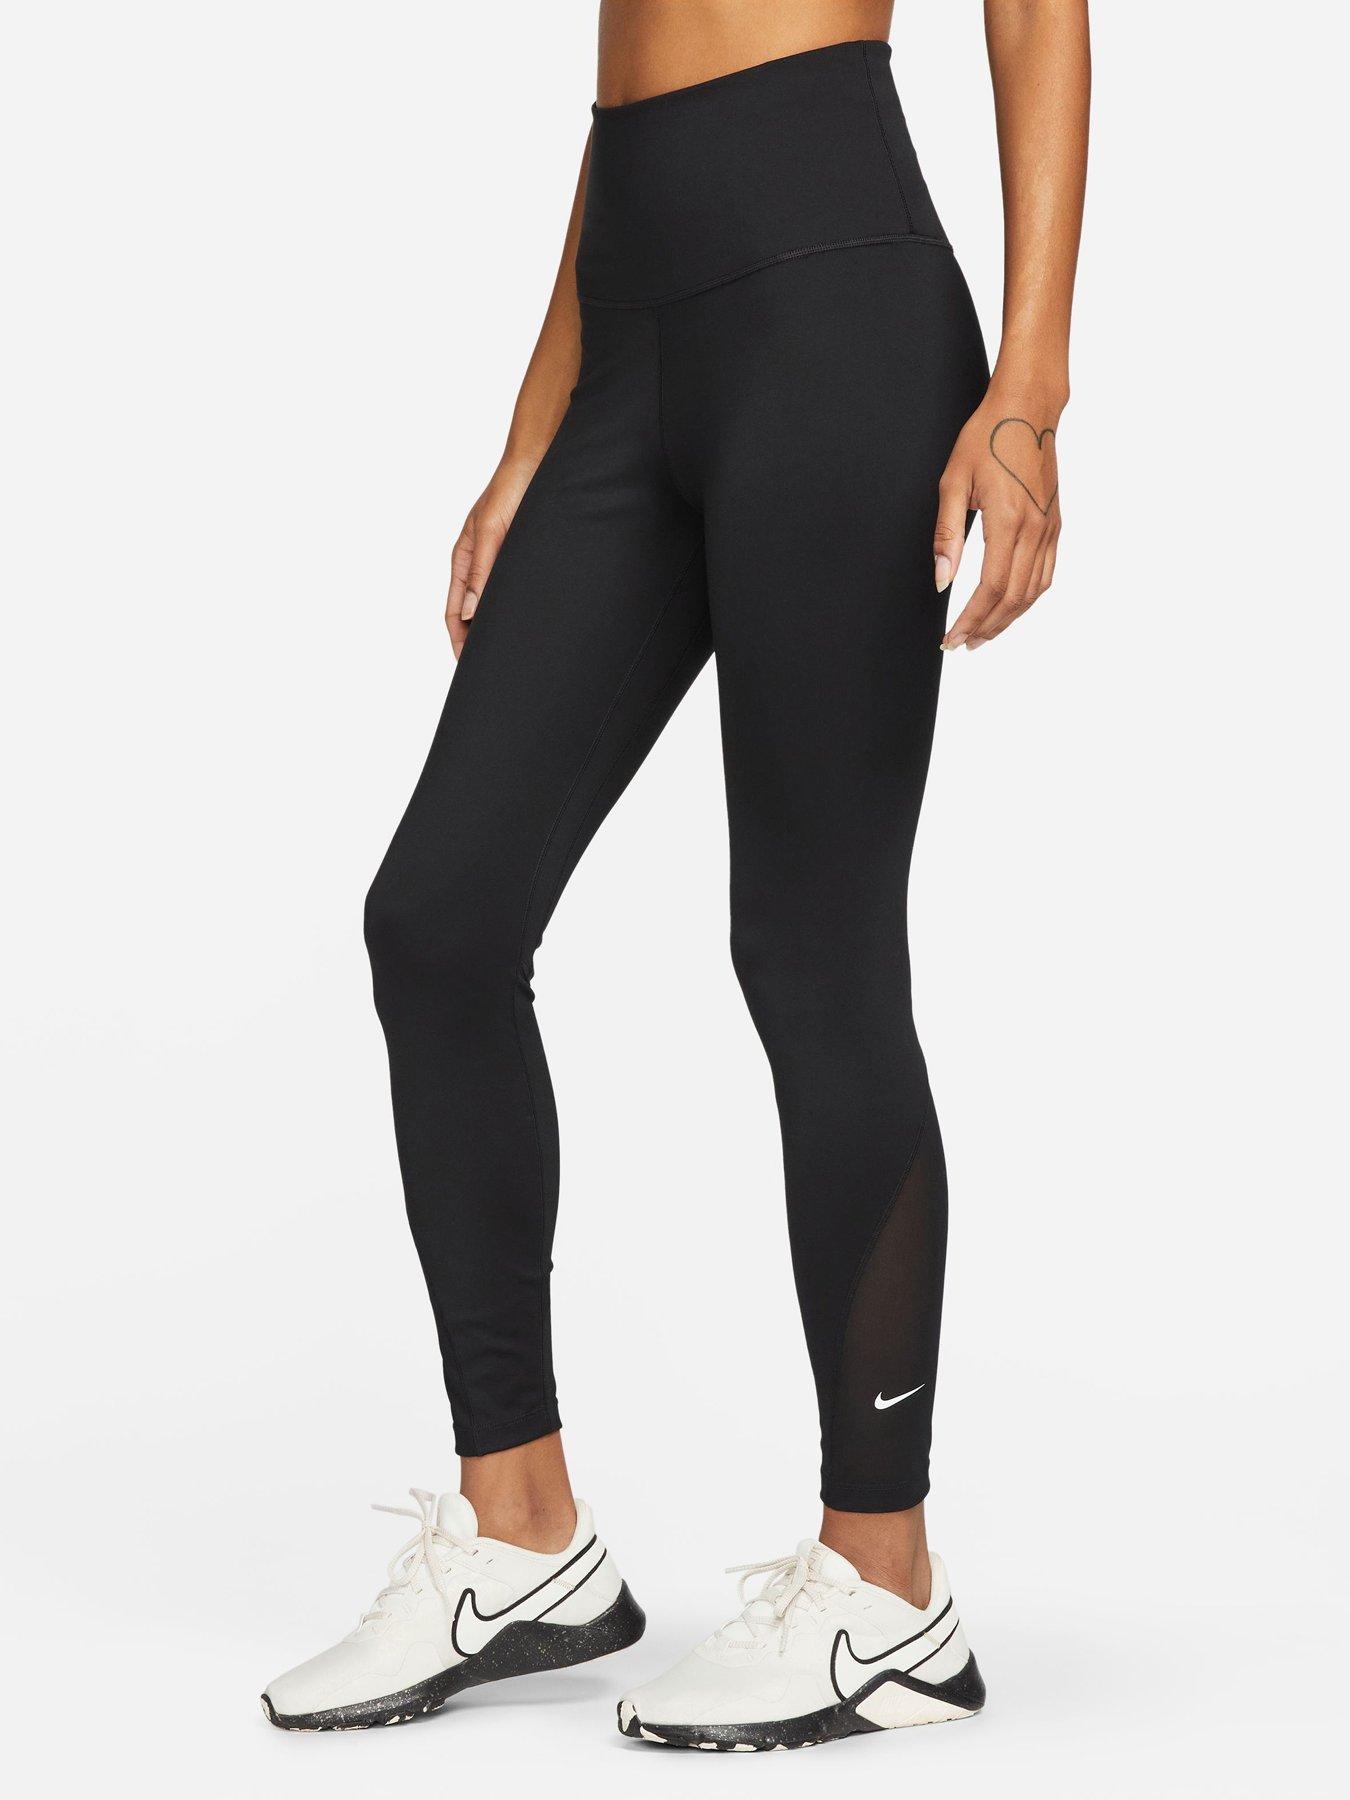 Nike Training Plus One Dri-FIT midrise leggings in black